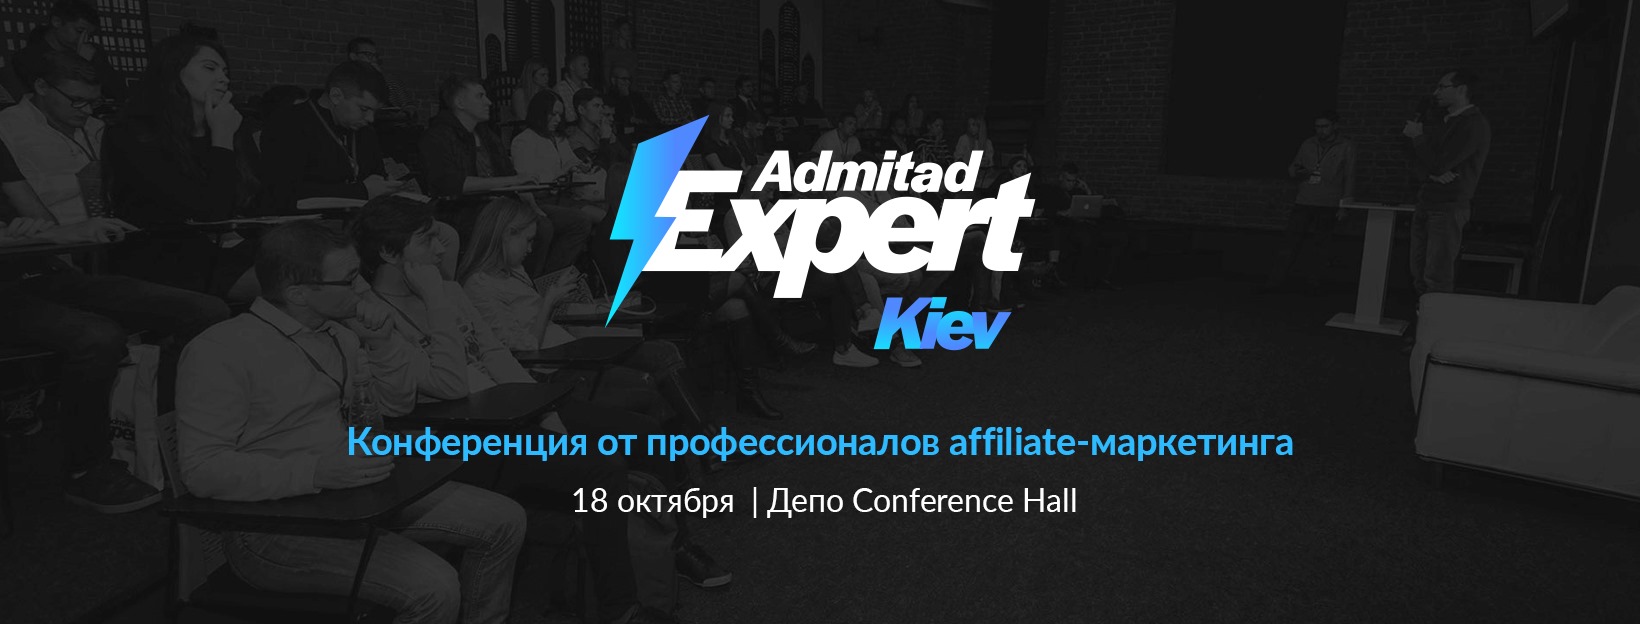 Admitad Expert Kiev 2019